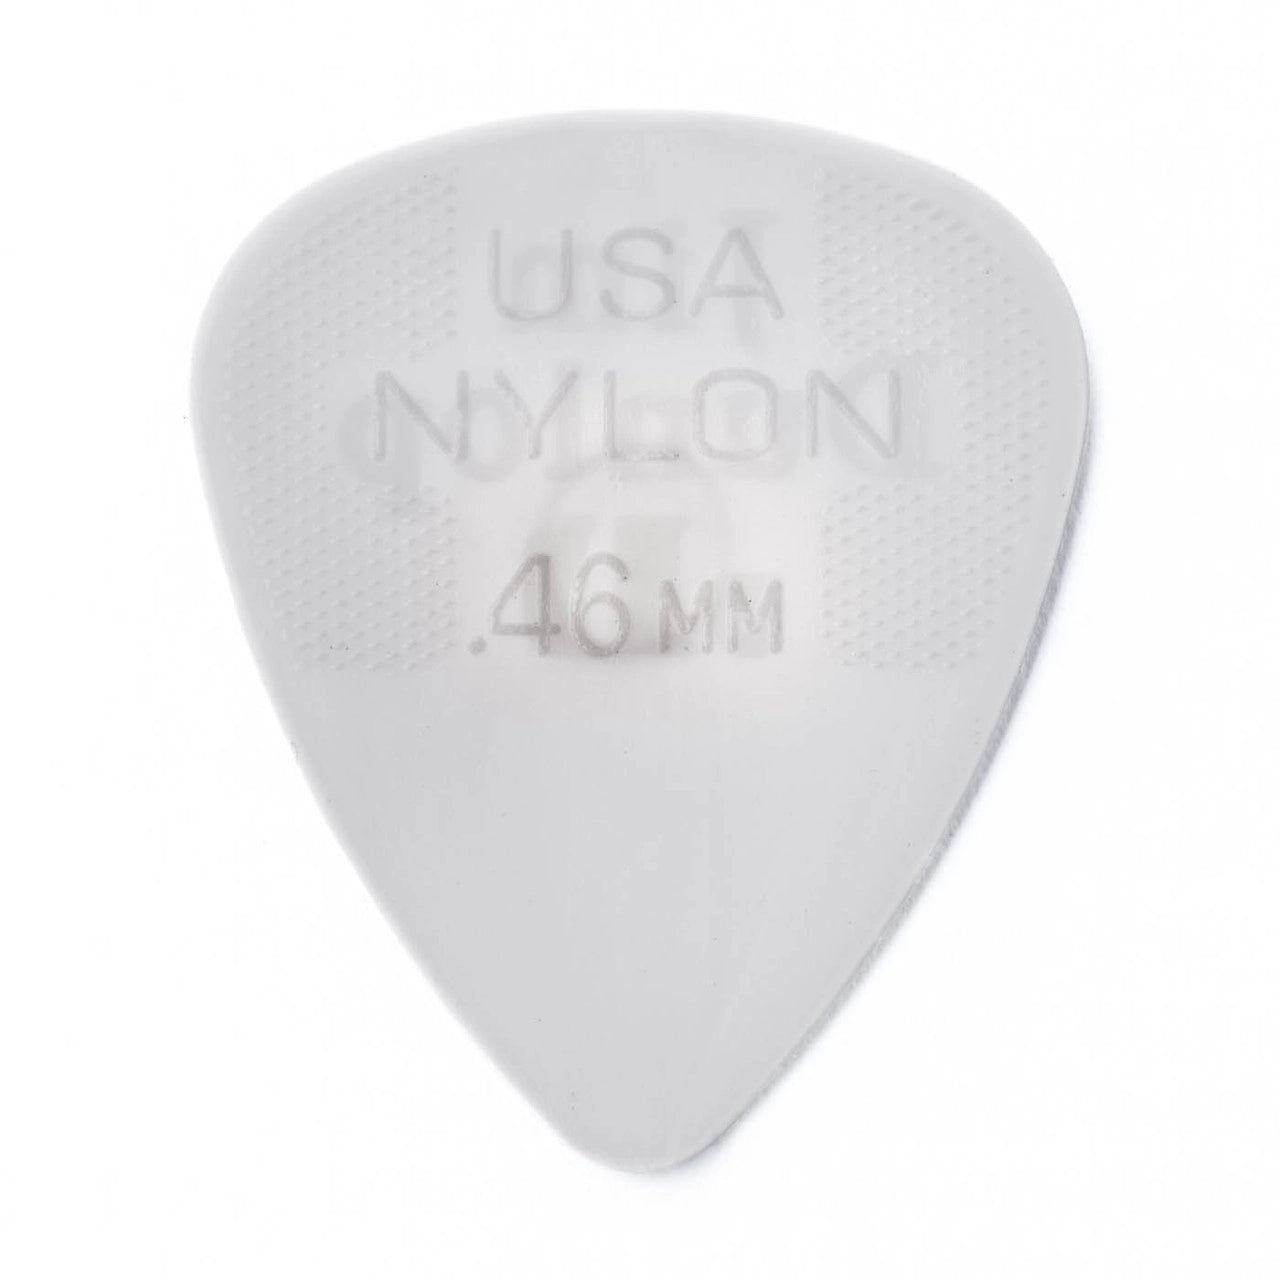 Dunlop Nylon Standard Pick .46mm